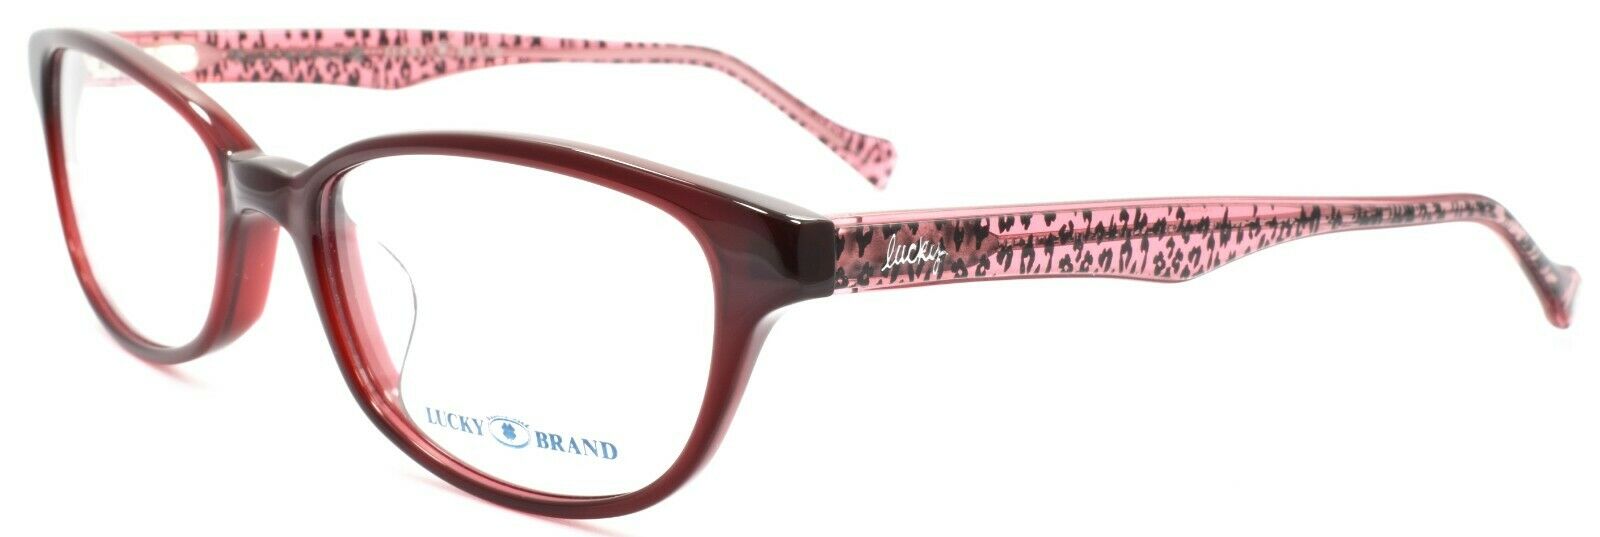 1-LUCKY BRAND Kona UF Women's Eyeglasses Frames 51-16-135 Burgundy + CASE-751286249262-IKSpecs